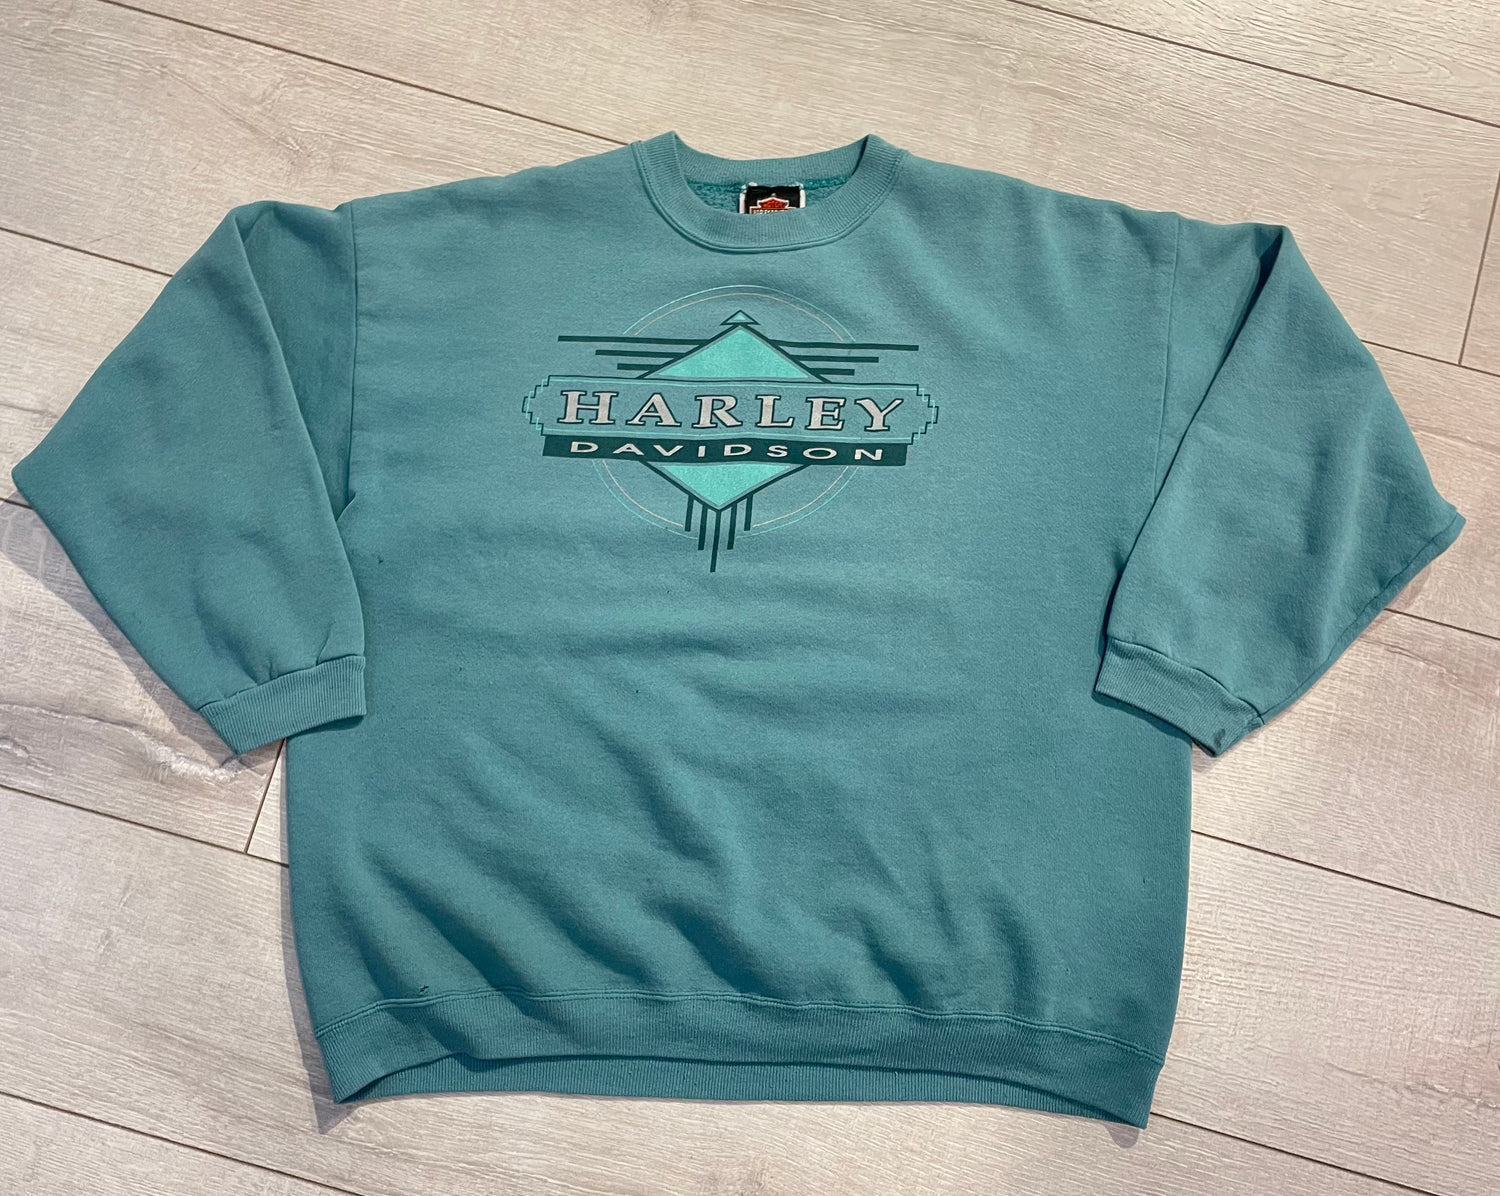 Vintage Harley Davidson Sweatshirt in Turquoise